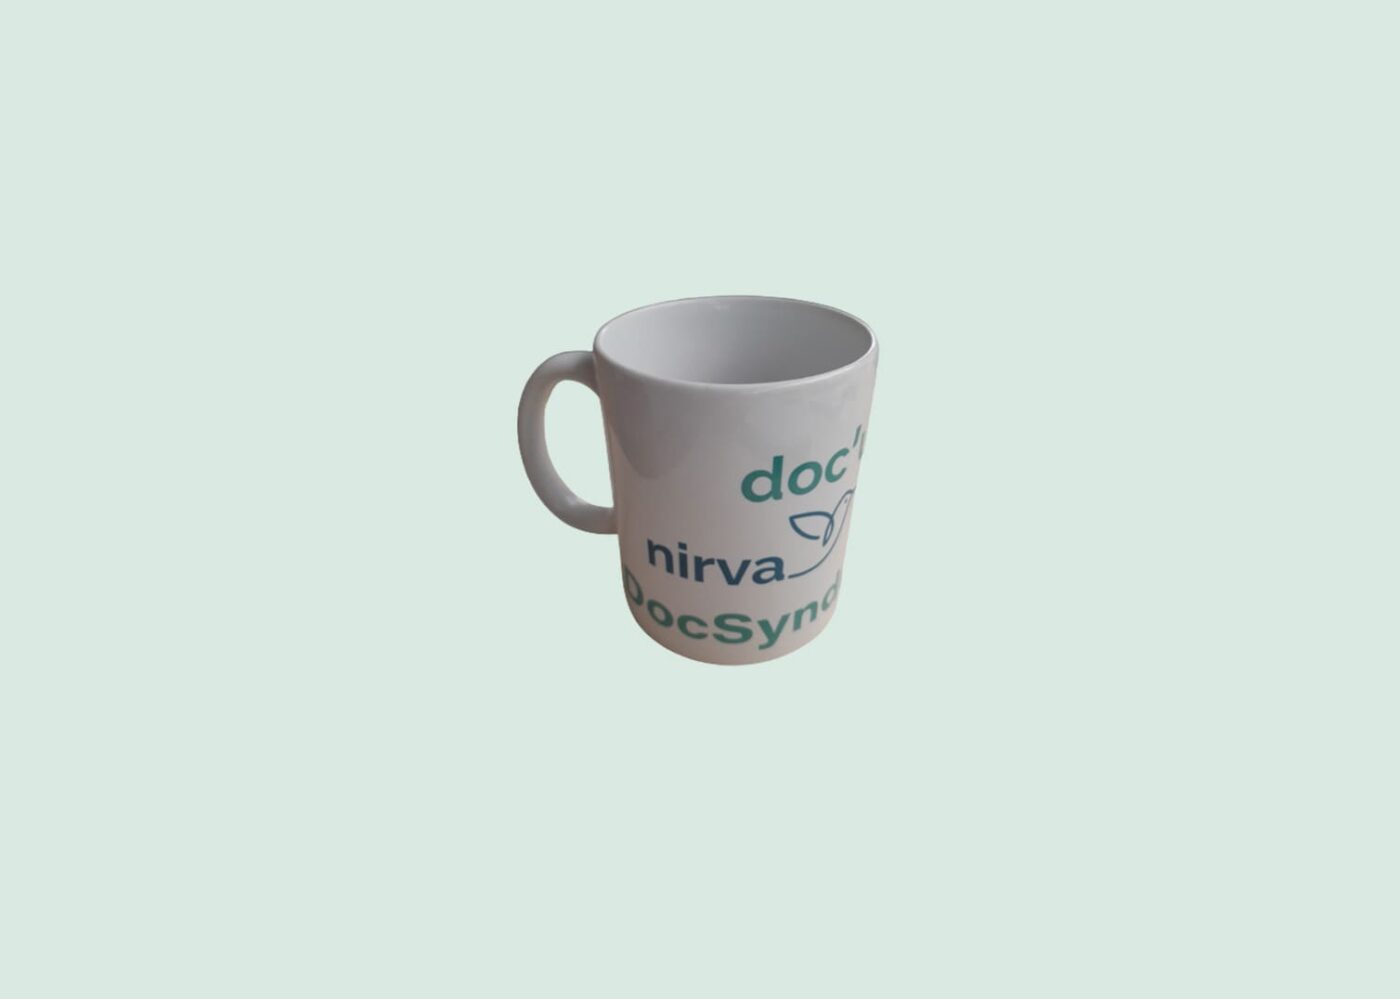 mug avec les logo doc’up nirva et docsyndic